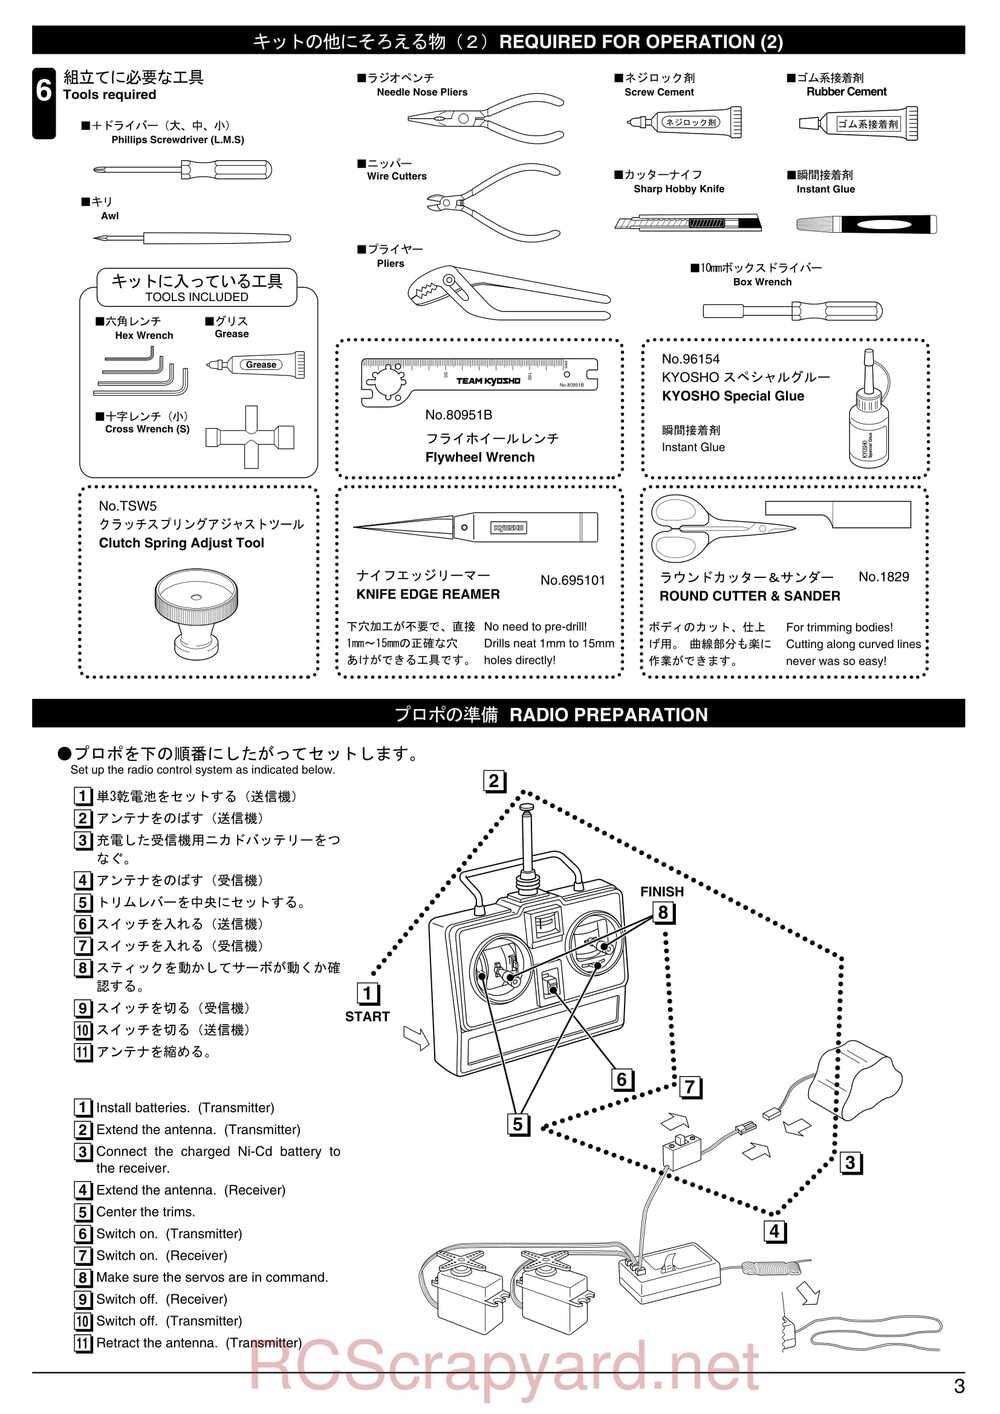 Kyosho - 31283 - Evolva-2003 - Manual - Page 03